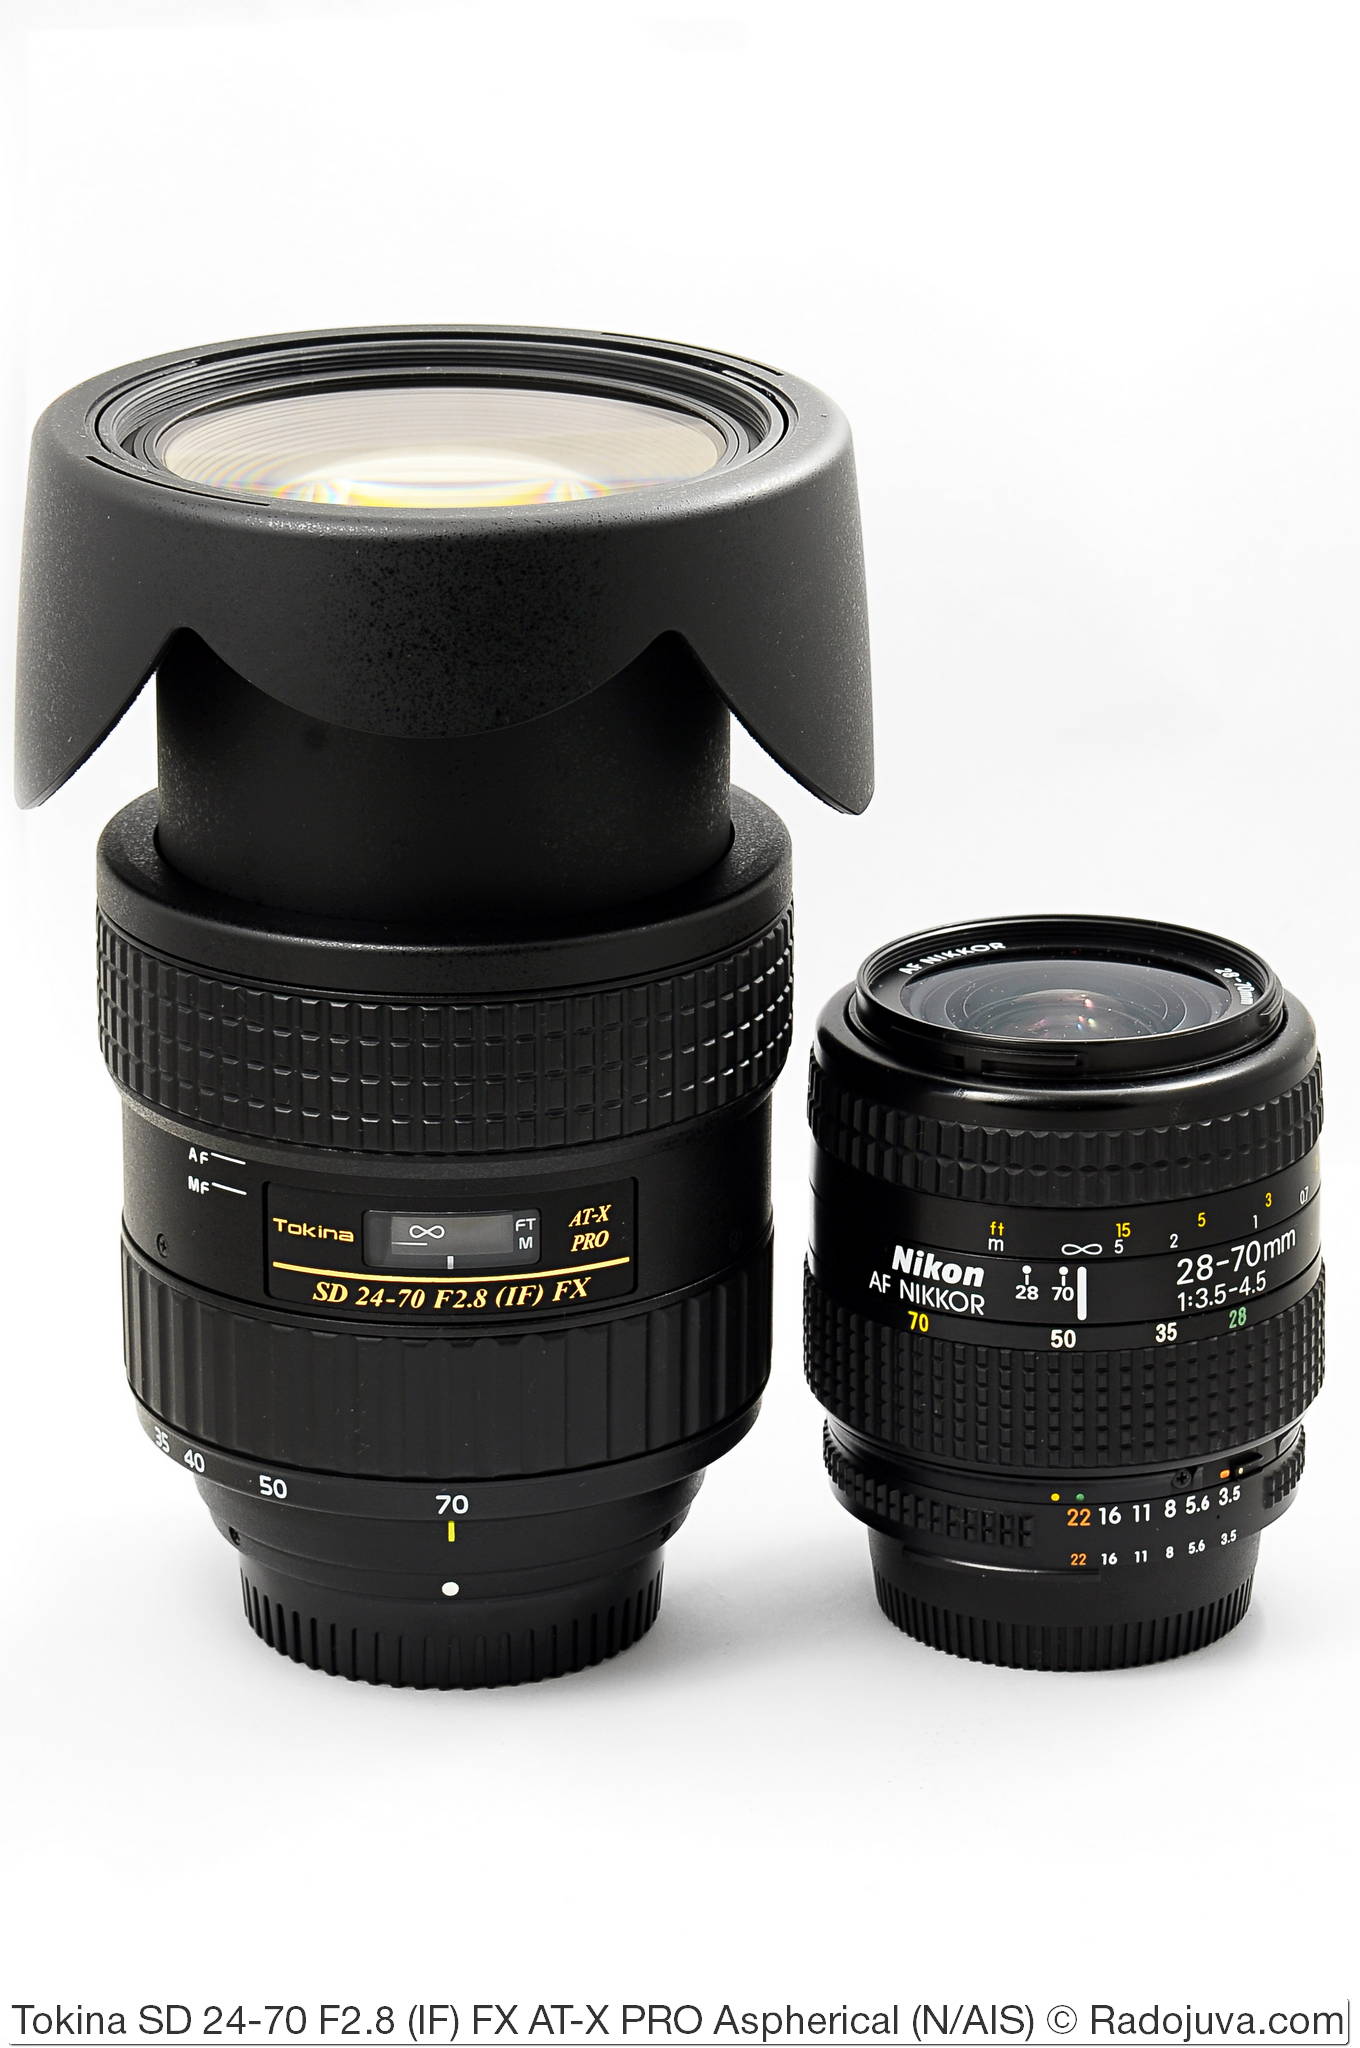 Размеры Tokina SD 24-70 F2.8 (IF) FX AT-X PRO Aspherical и Nikon AF Nikkor 28-70mm 1:3.5-4.5 (MKI)